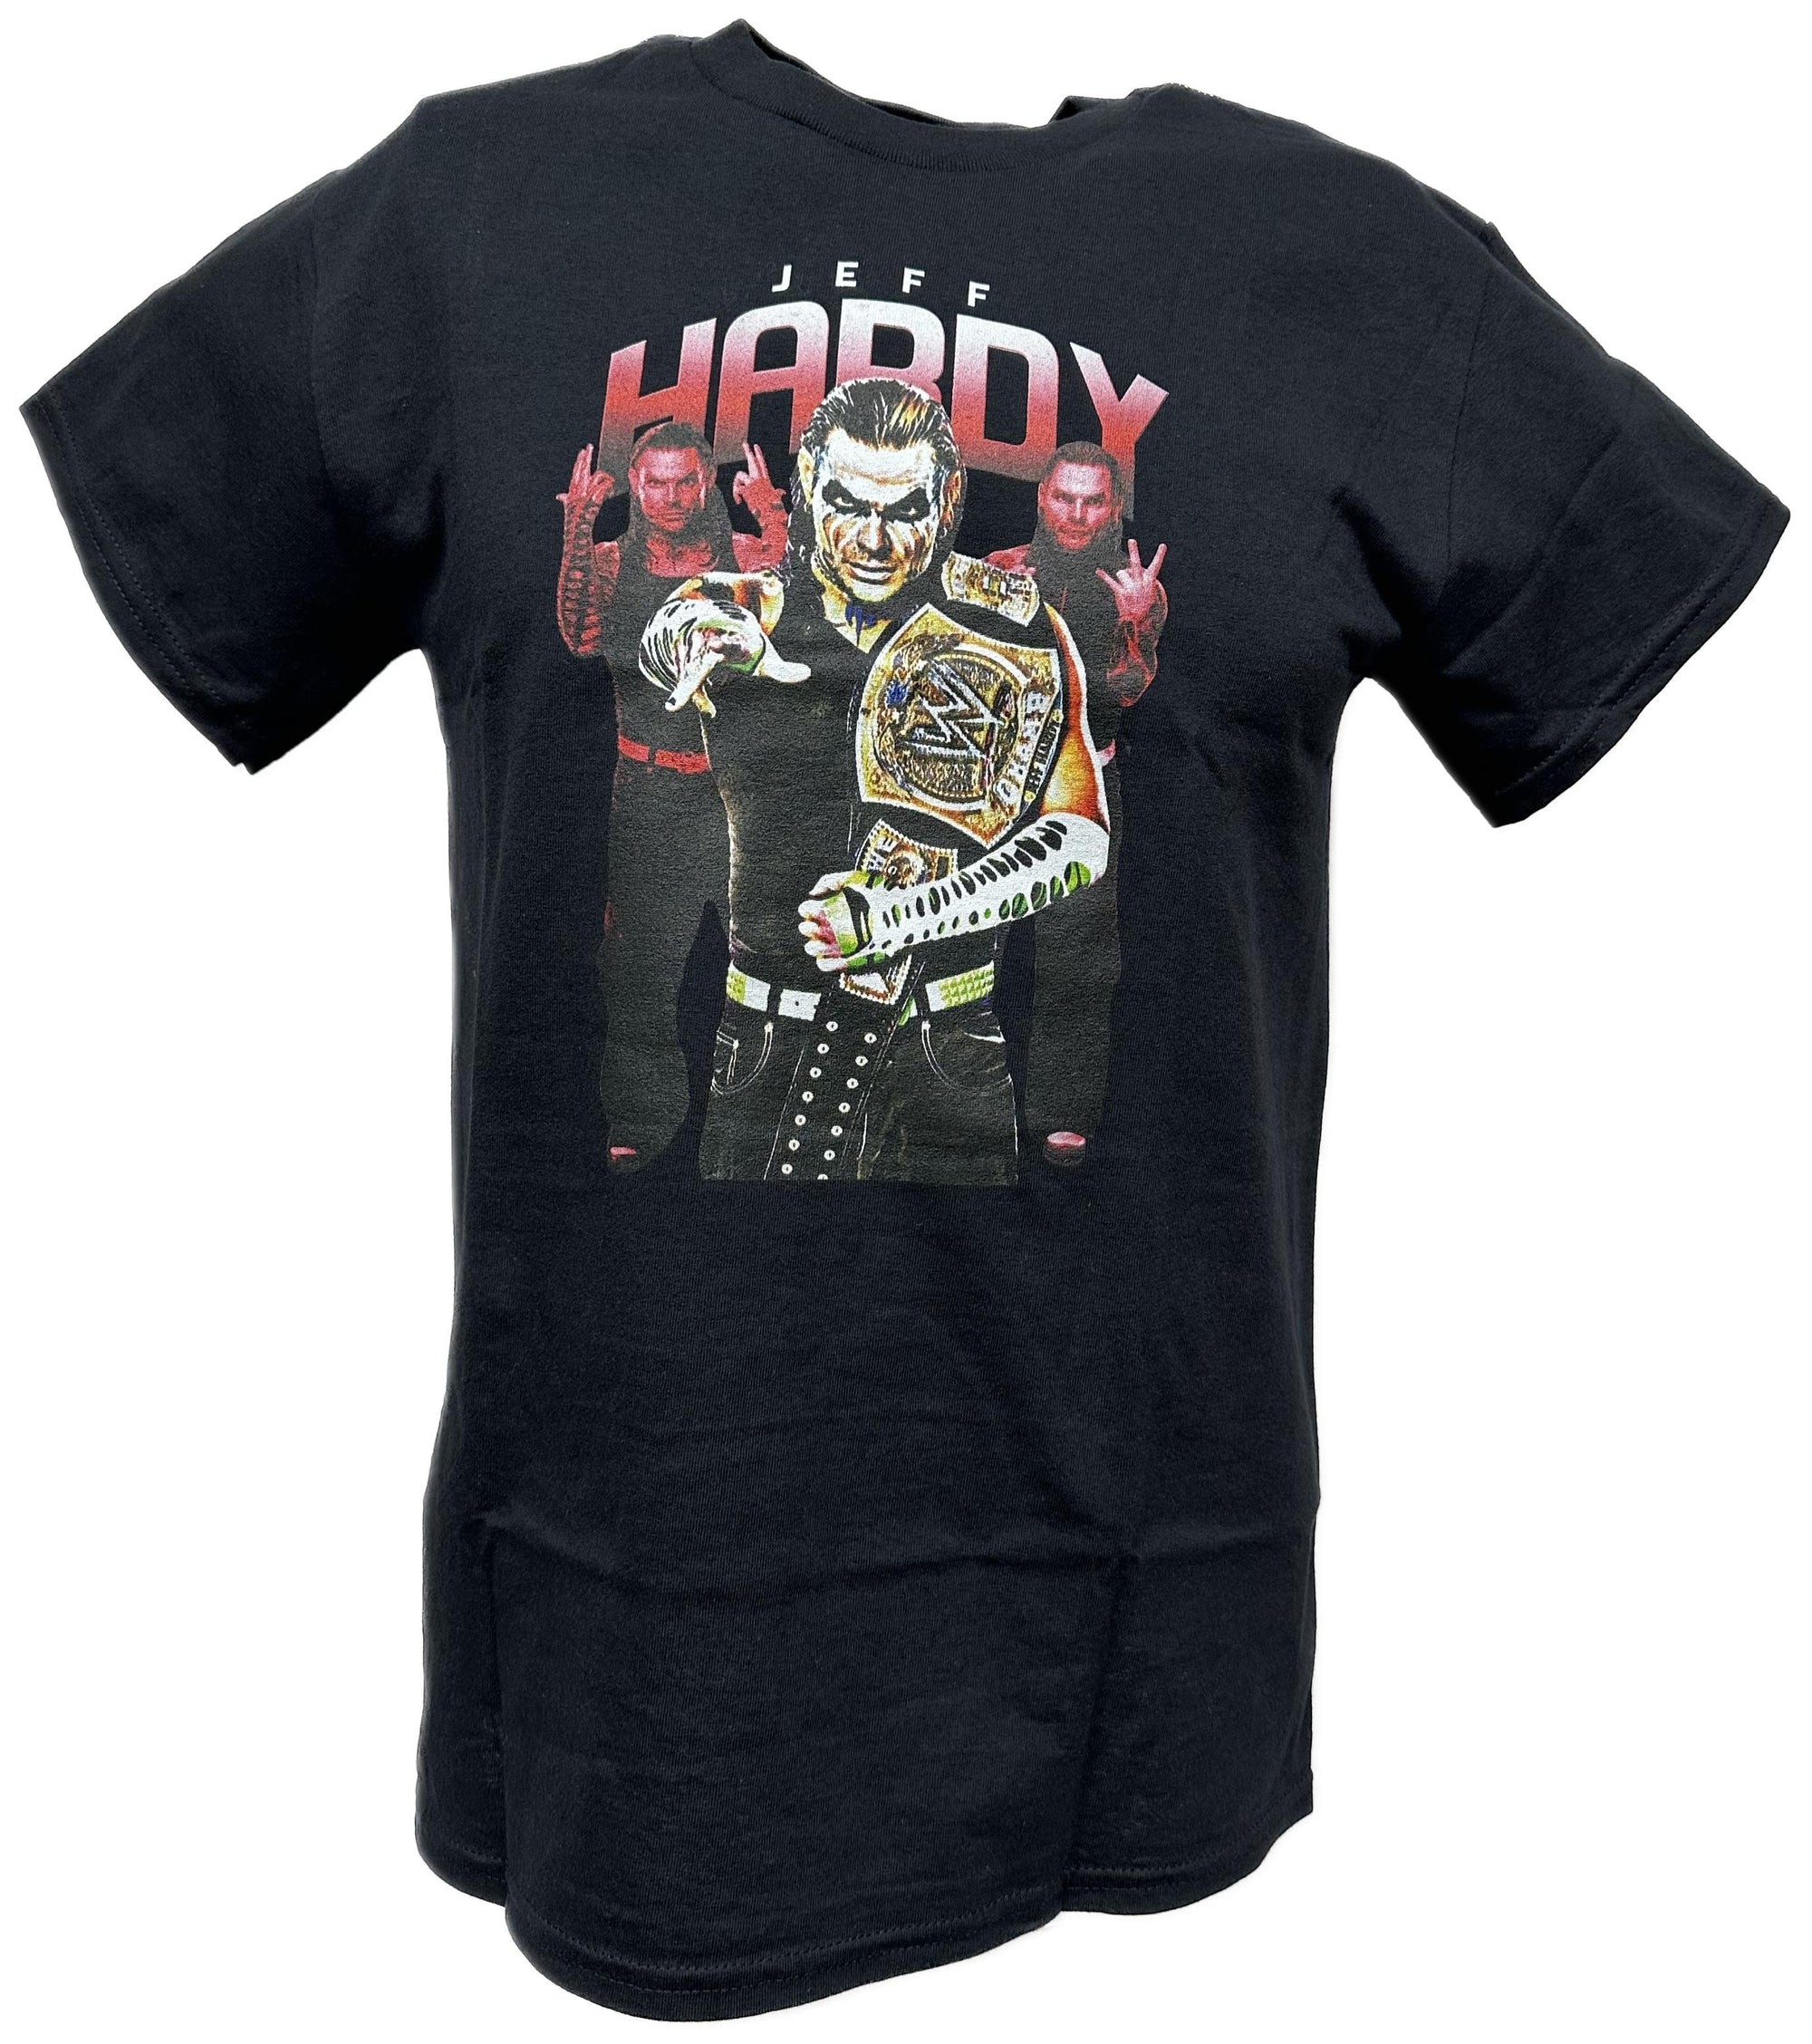 Jeff Hardy Championship Belt Painted Face Mens Black T-shirt